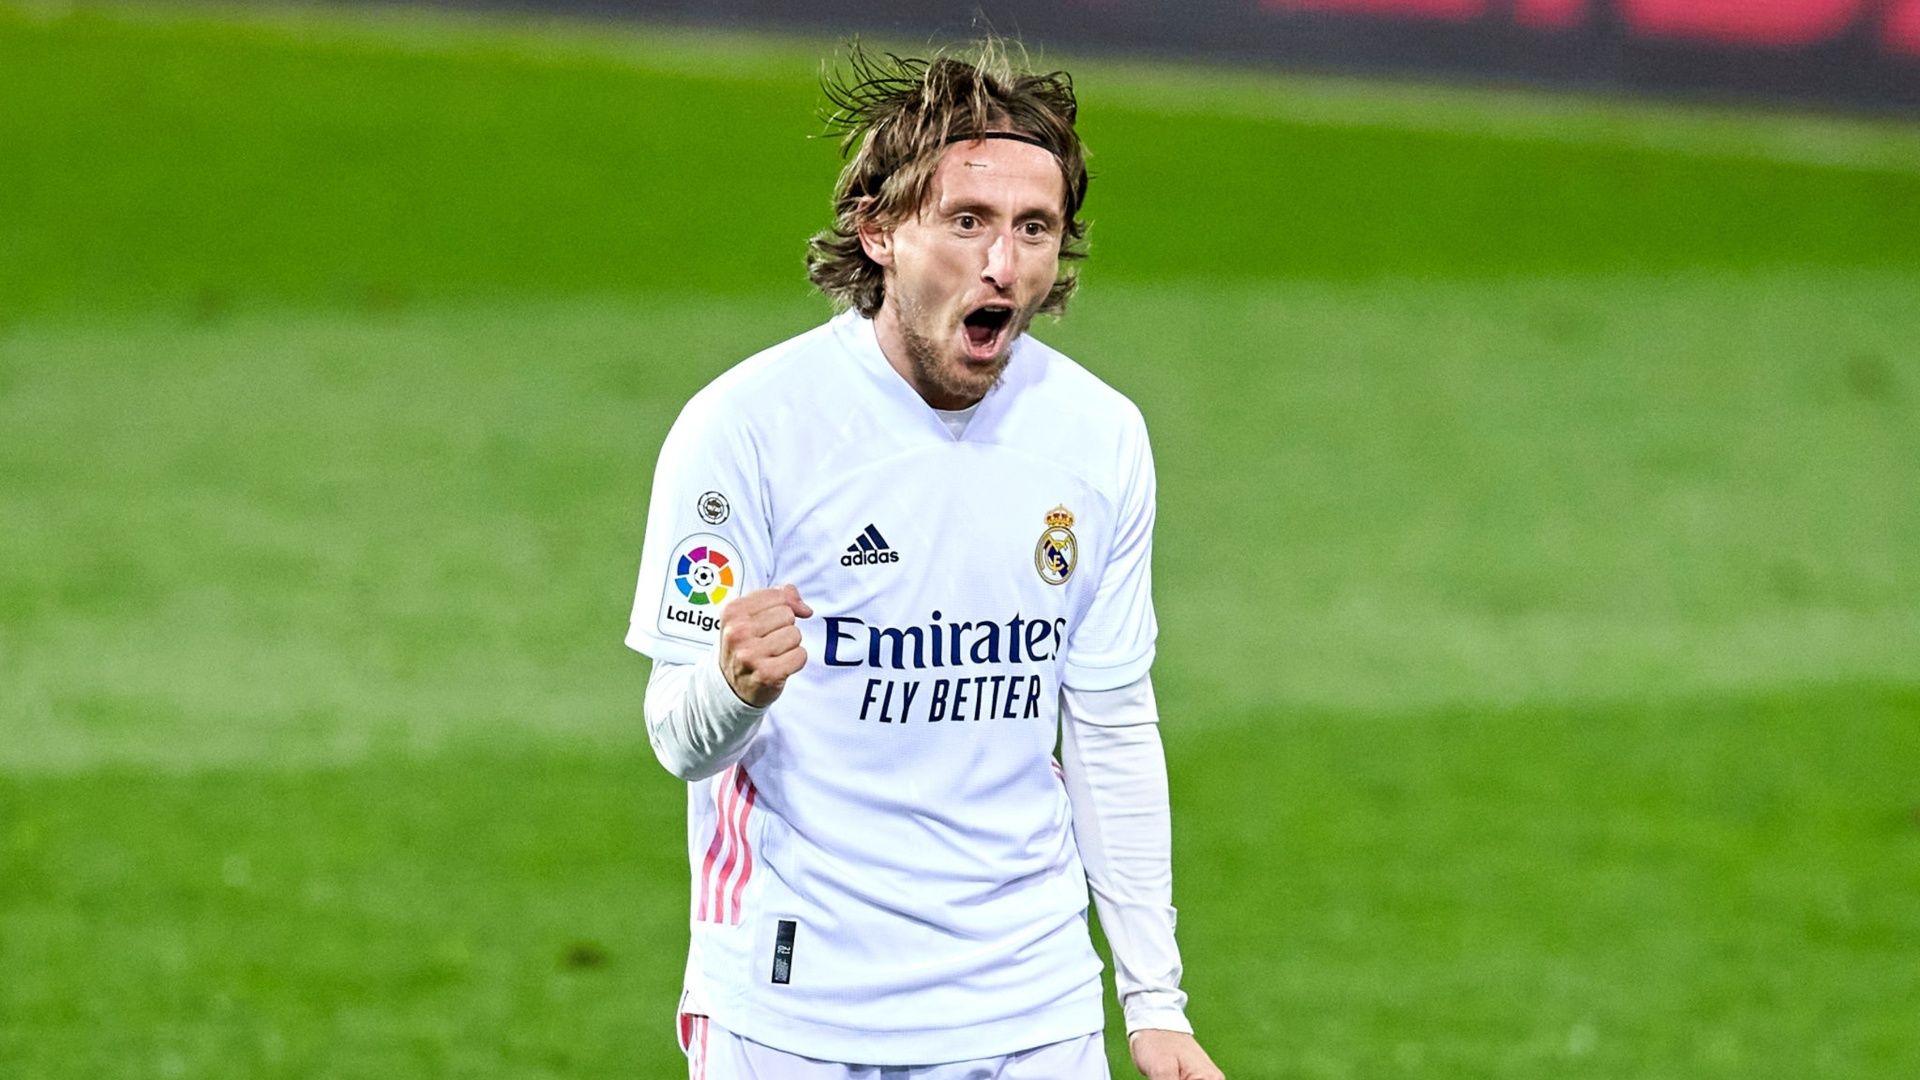 More than an artist, Modric ranks among the best midfielders ever